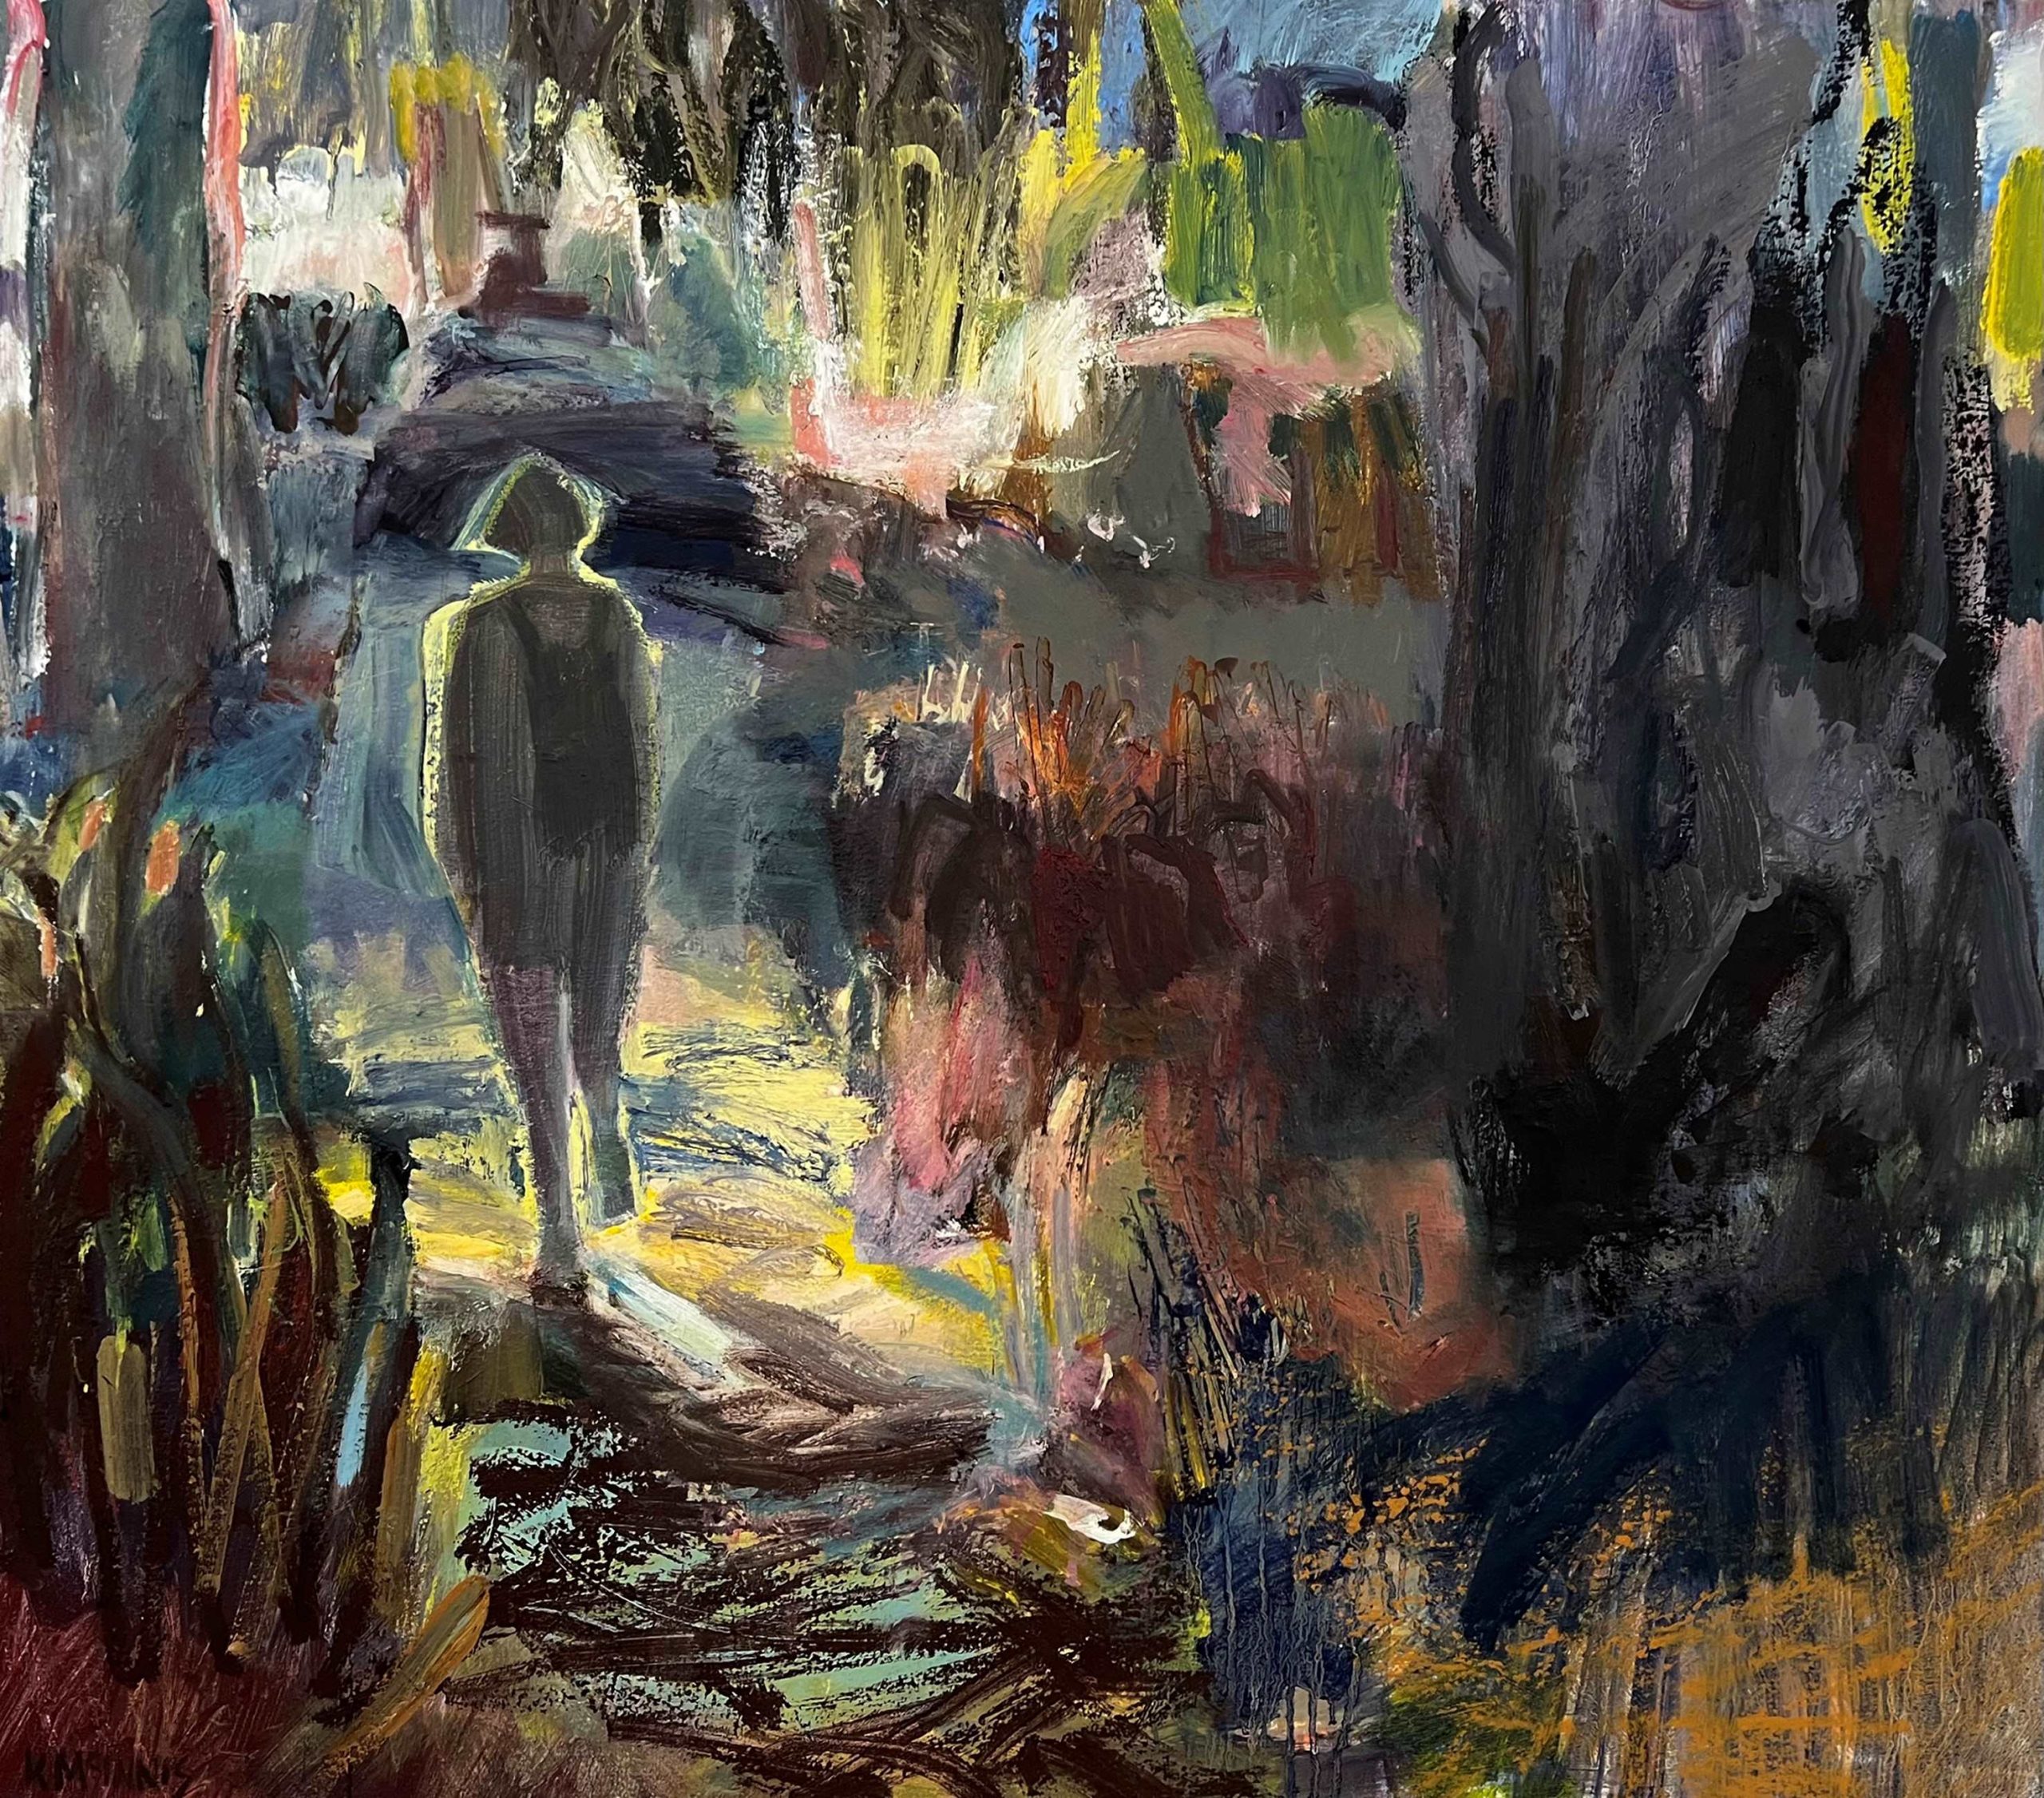 Kerry McInnis 'Dawn Walker' oil on canvas 92 x 102 $9,000